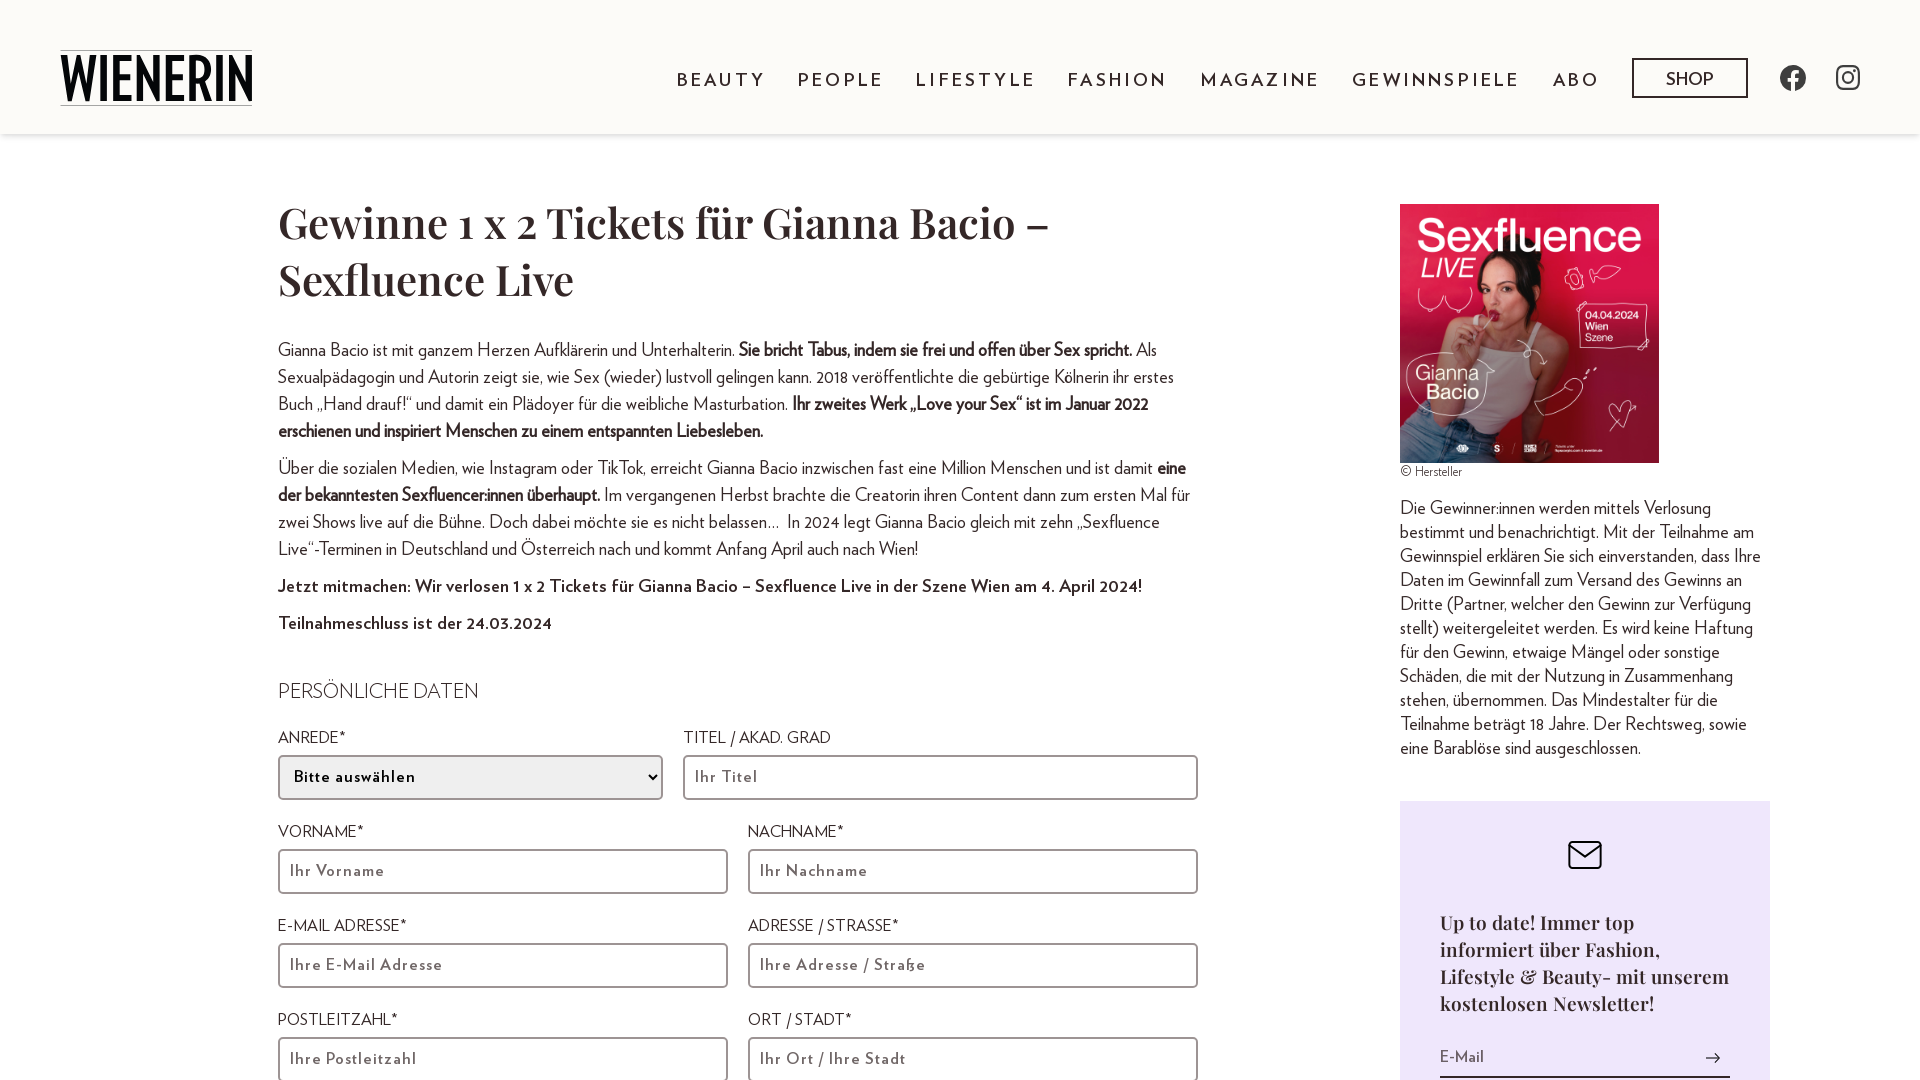 1 x 2 Tickets für Gianna Bacio – Sexfluence Live